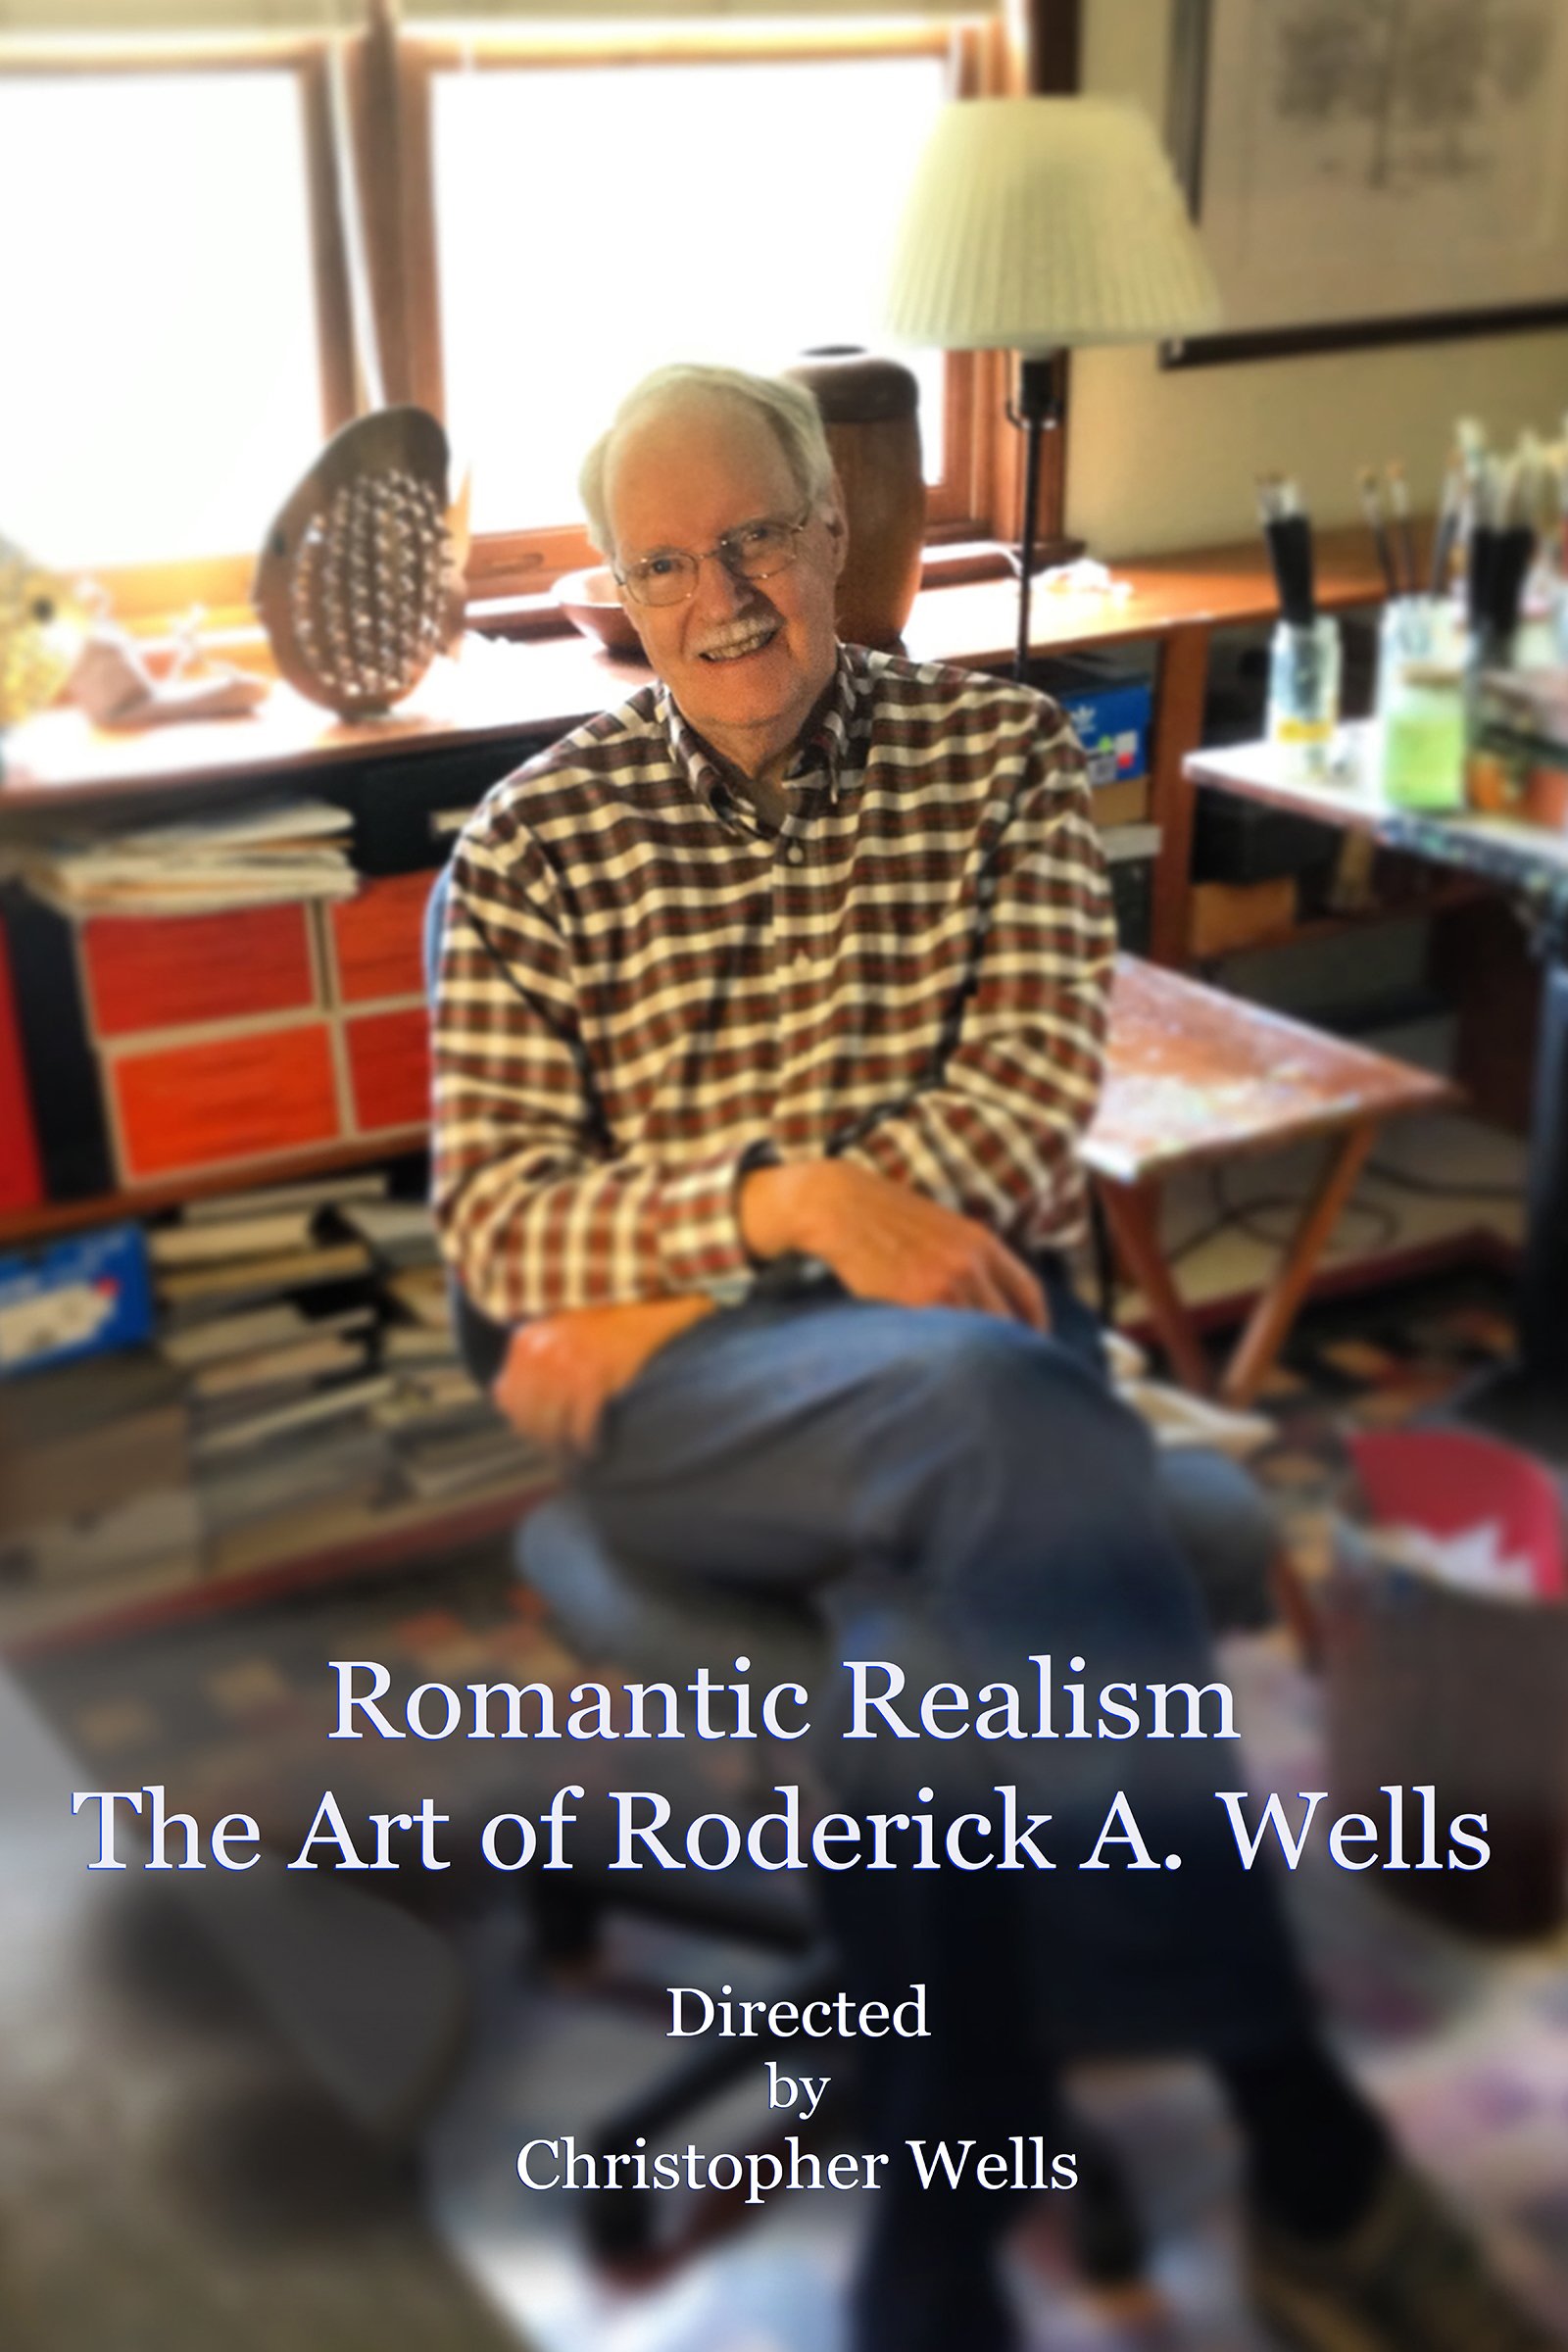 romantic-realisim-rod-wells-christopher-wells-kaleidoscope-nyc-documentray.jpg